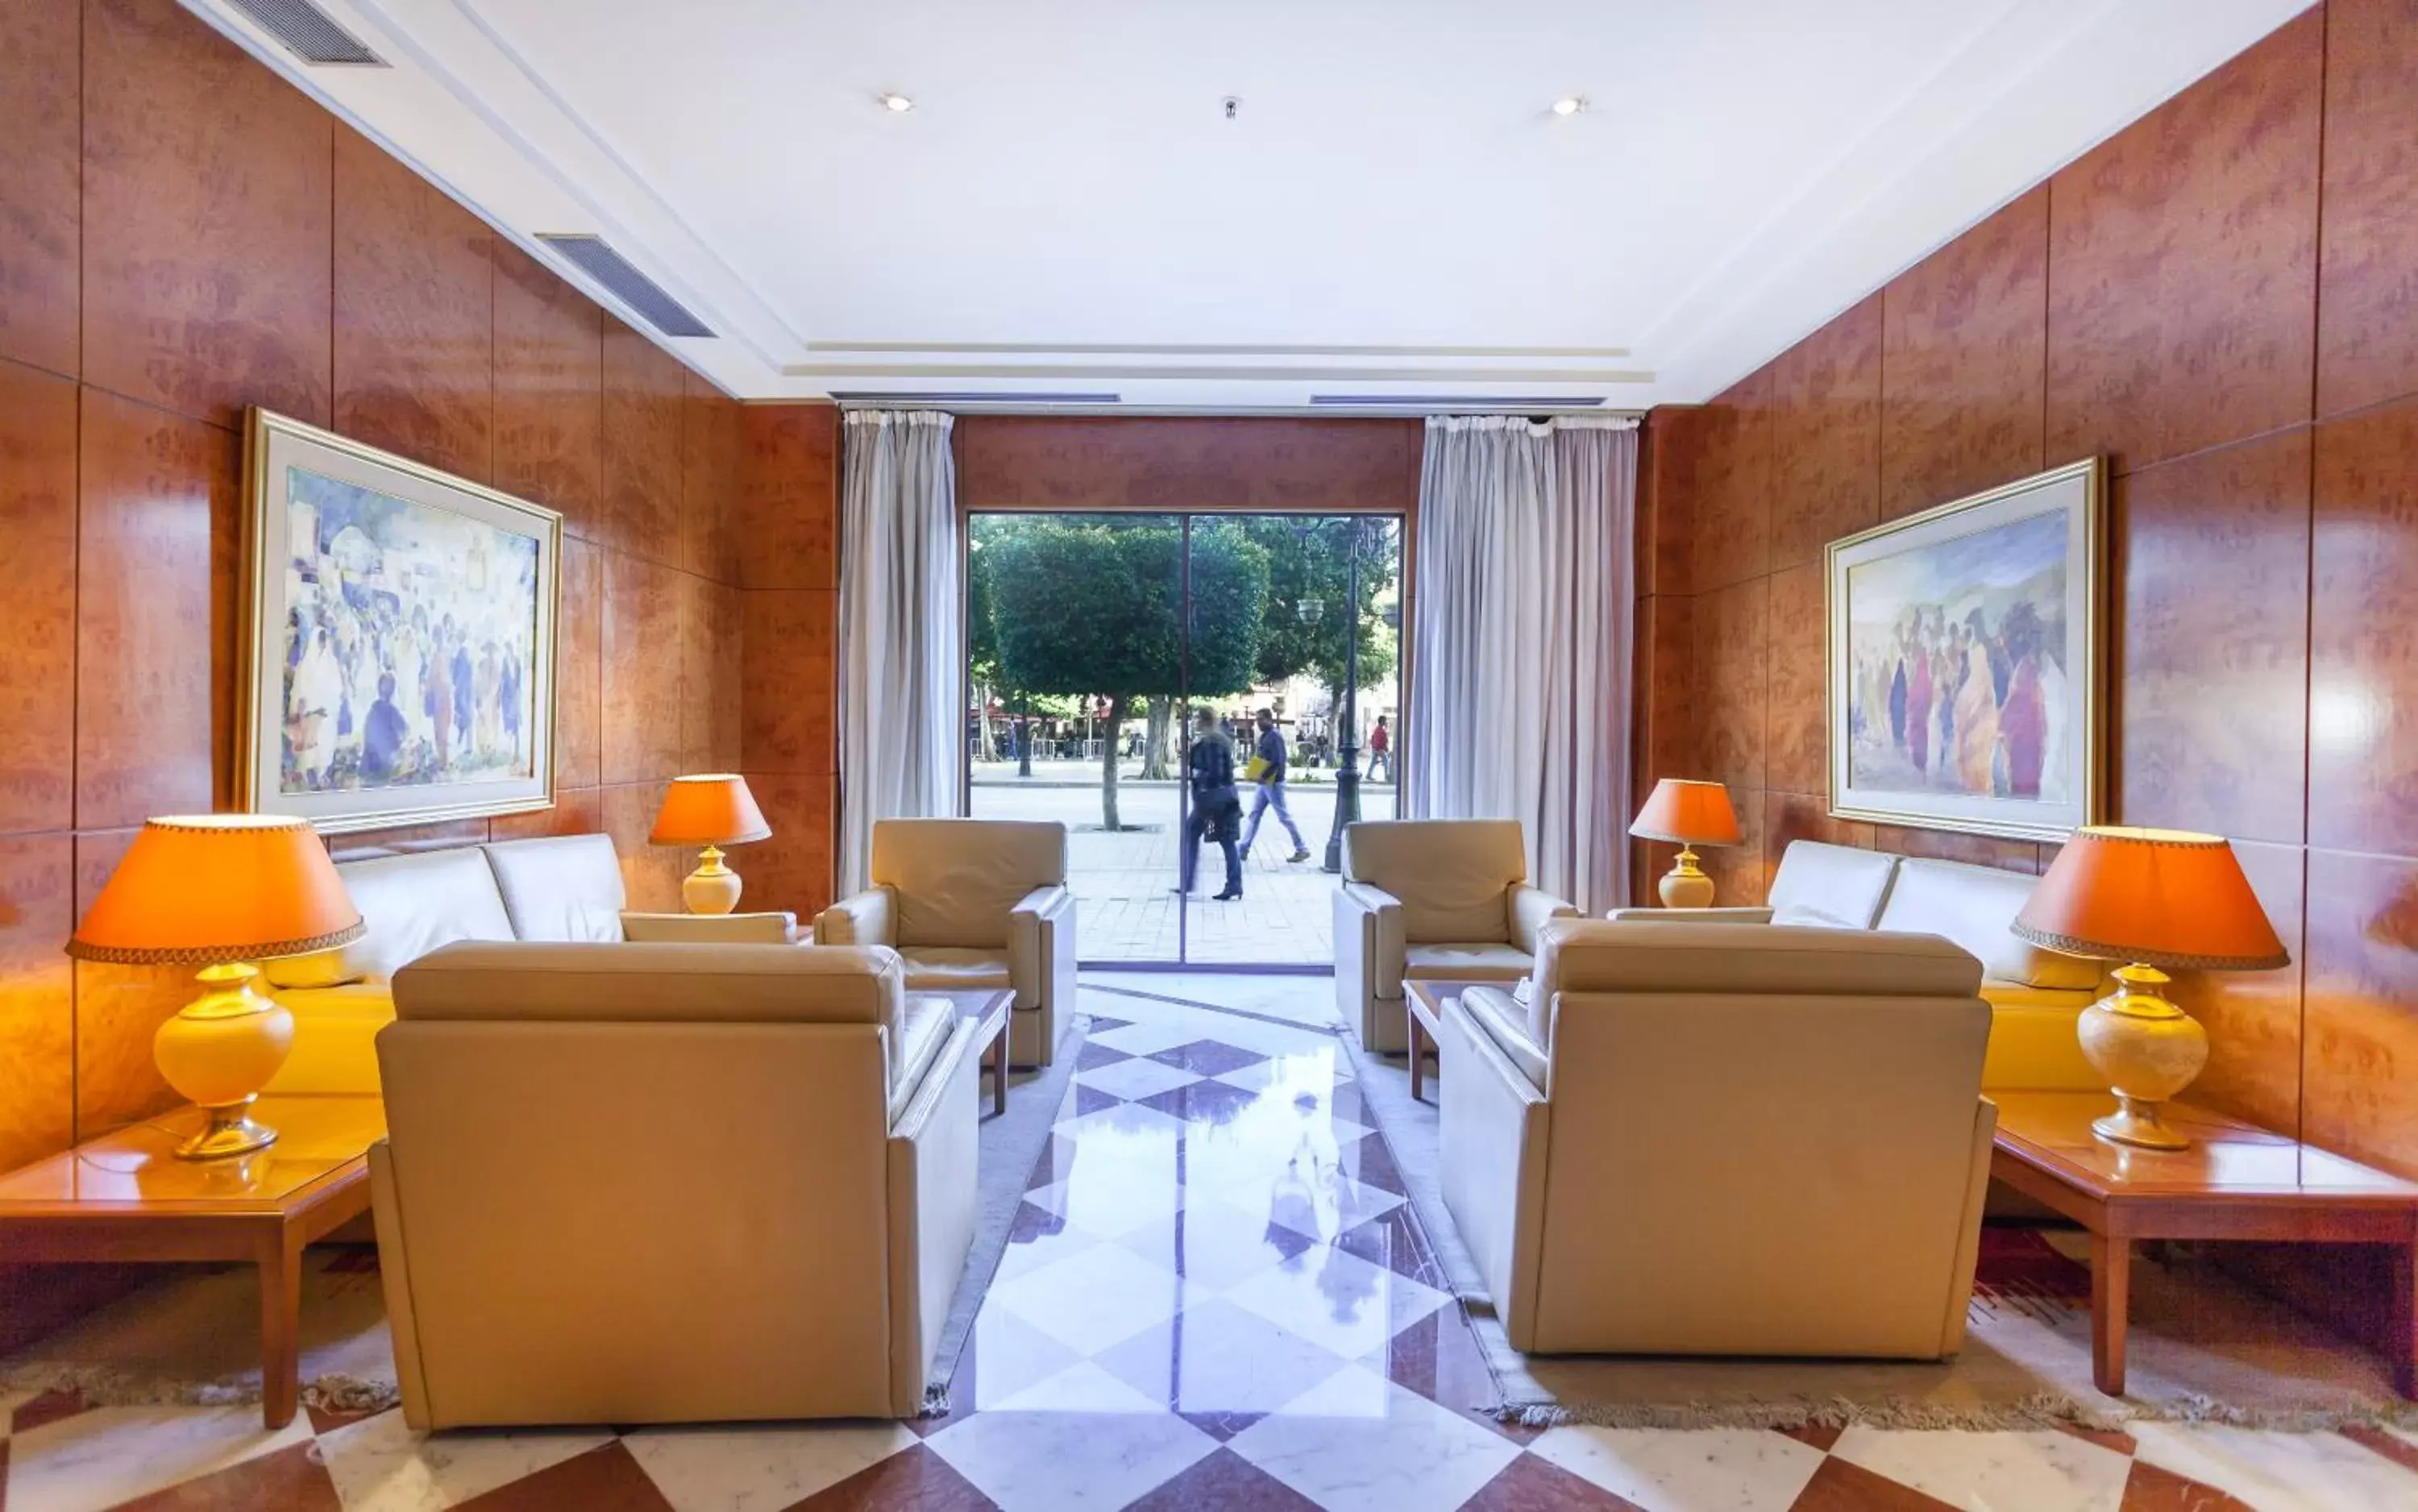 Lobby or reception in El Mouradi Hotel Africa Tunis